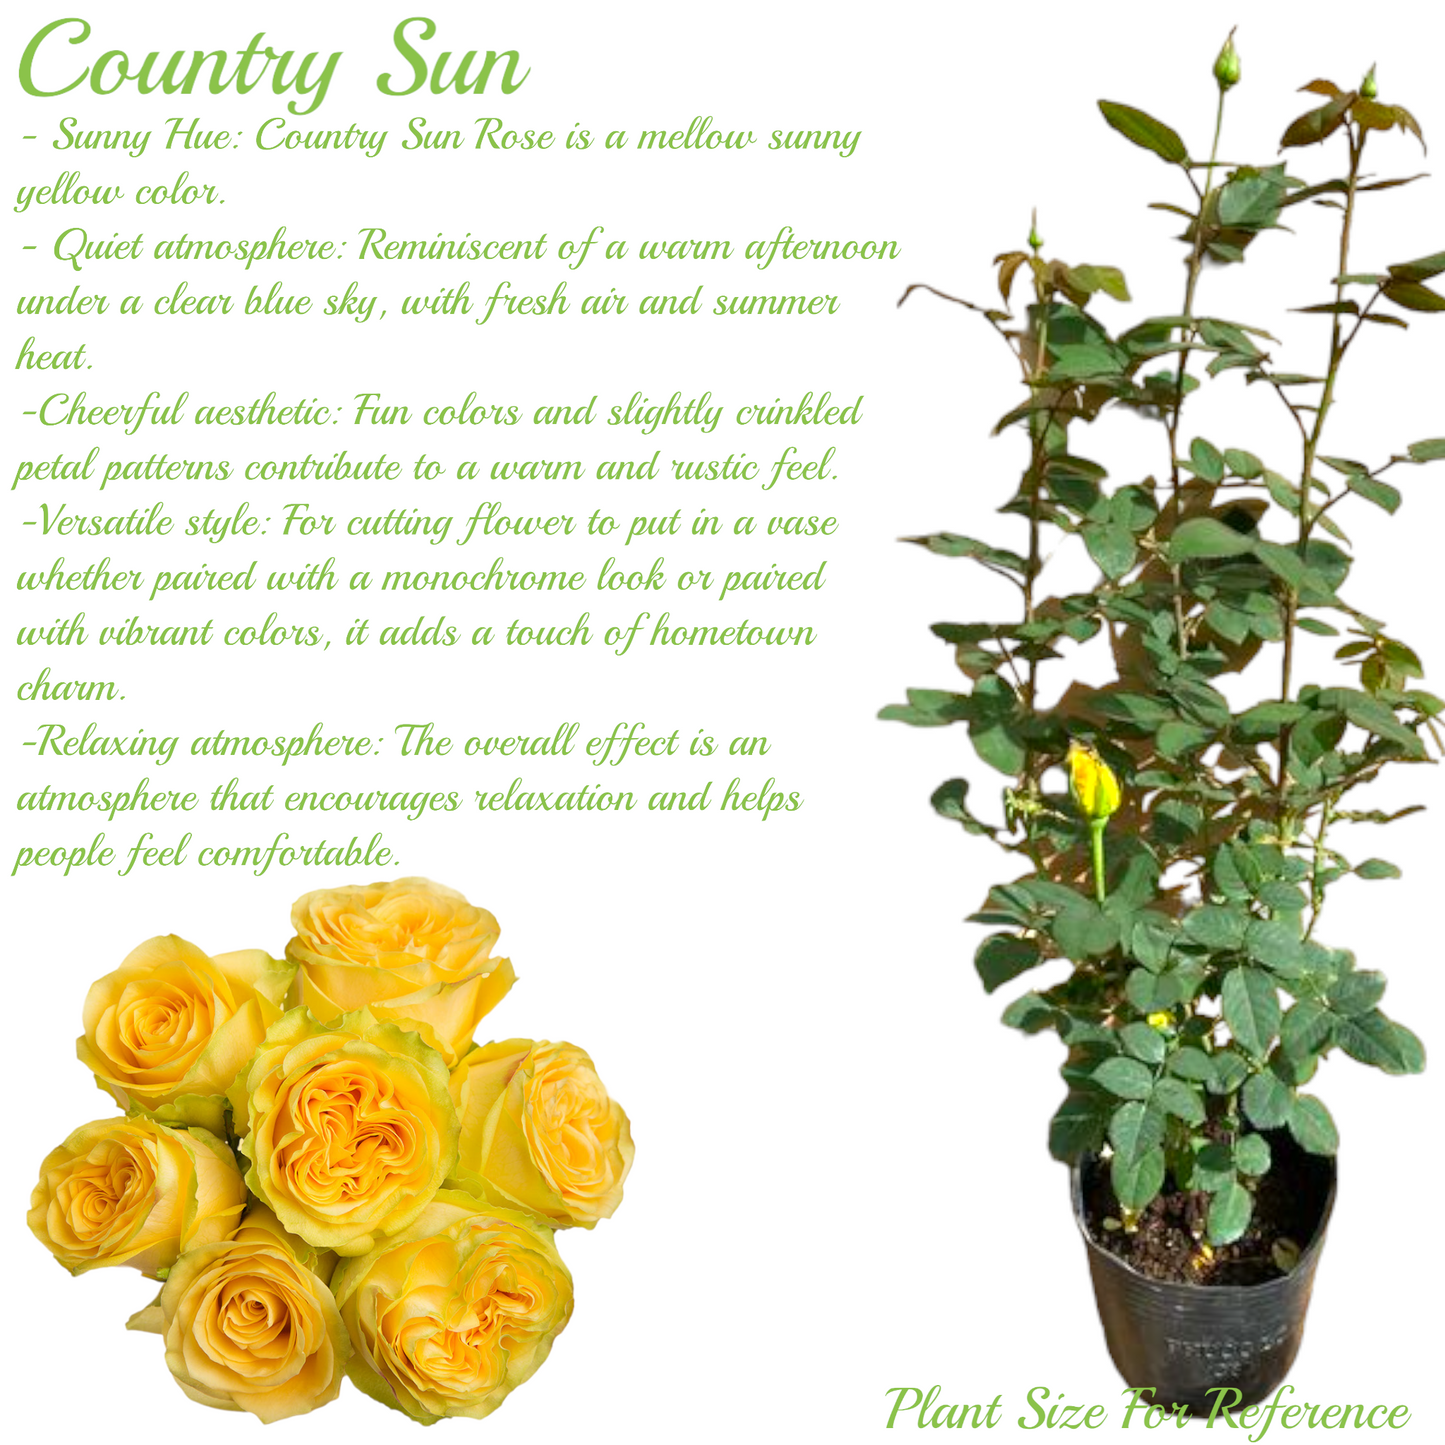 Country Sun